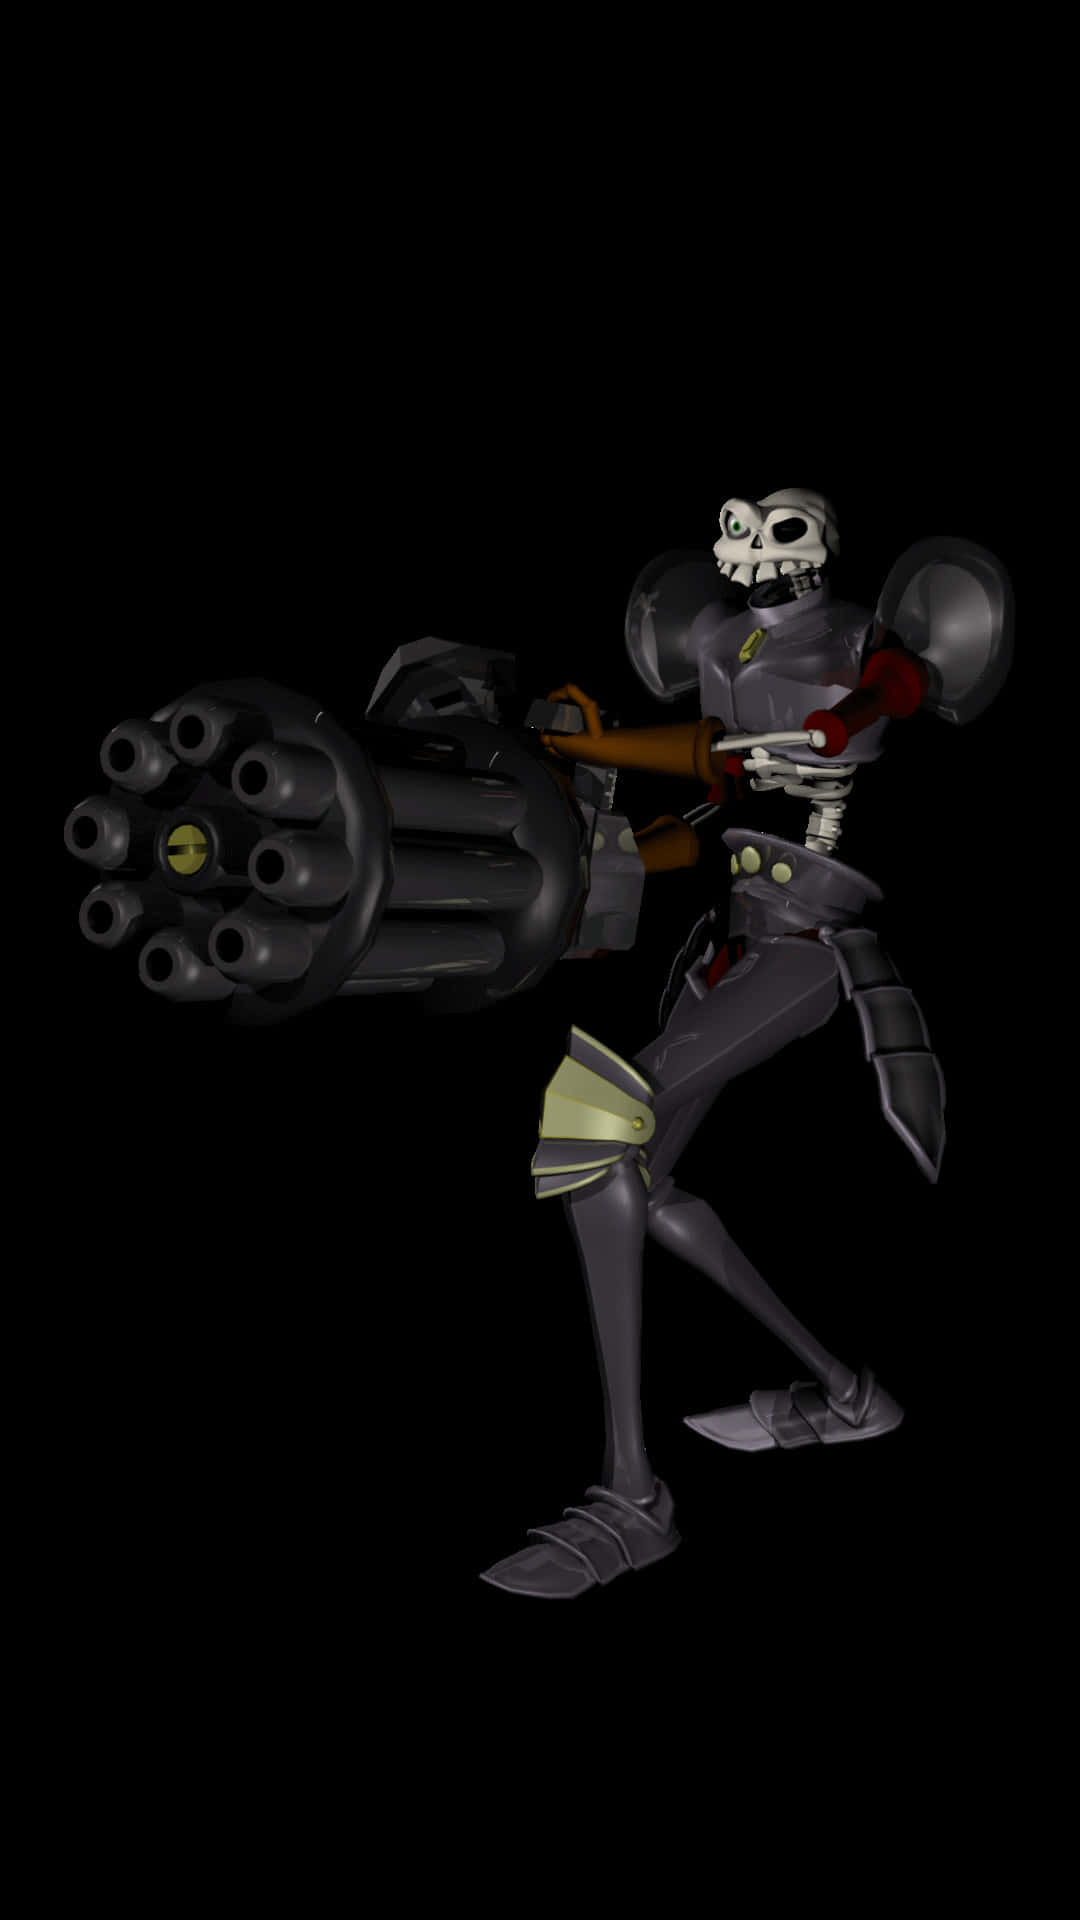 A Skeleton Holding A Gun Wallpaper